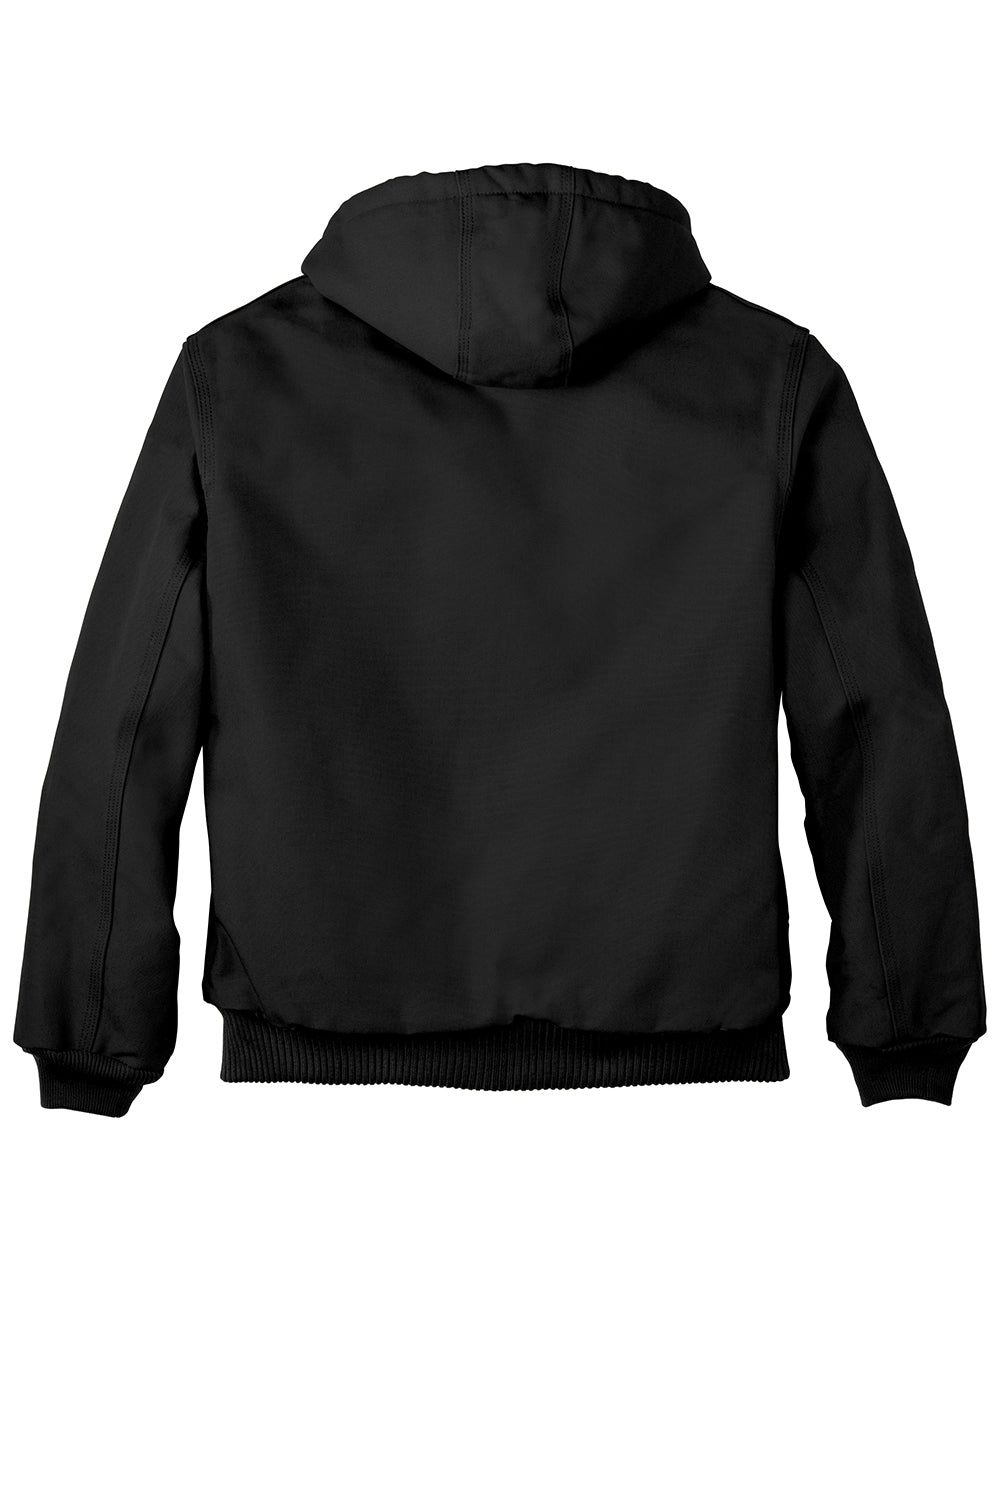 Carhartt CTSJ140/CTTSJ140 Mens Wind & Water Resistant Duck Cloth Full Zip Hooded Work Jacket Black Flat Back